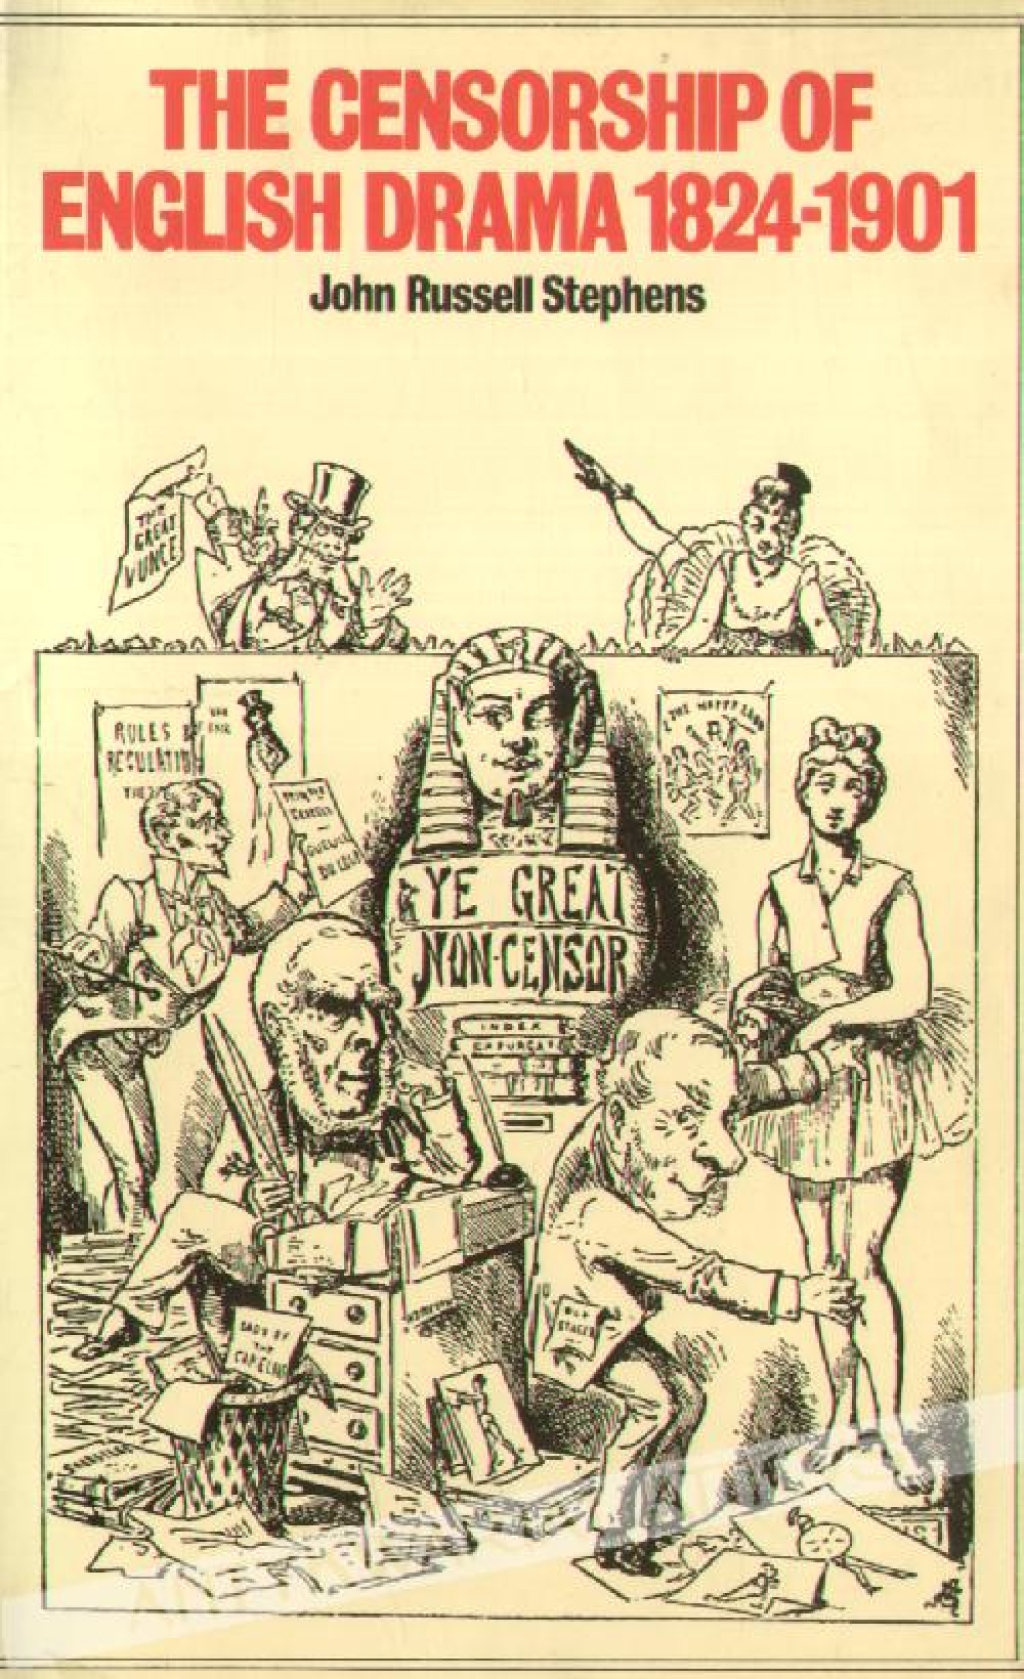 The Censorship of English Drama 1824-1901